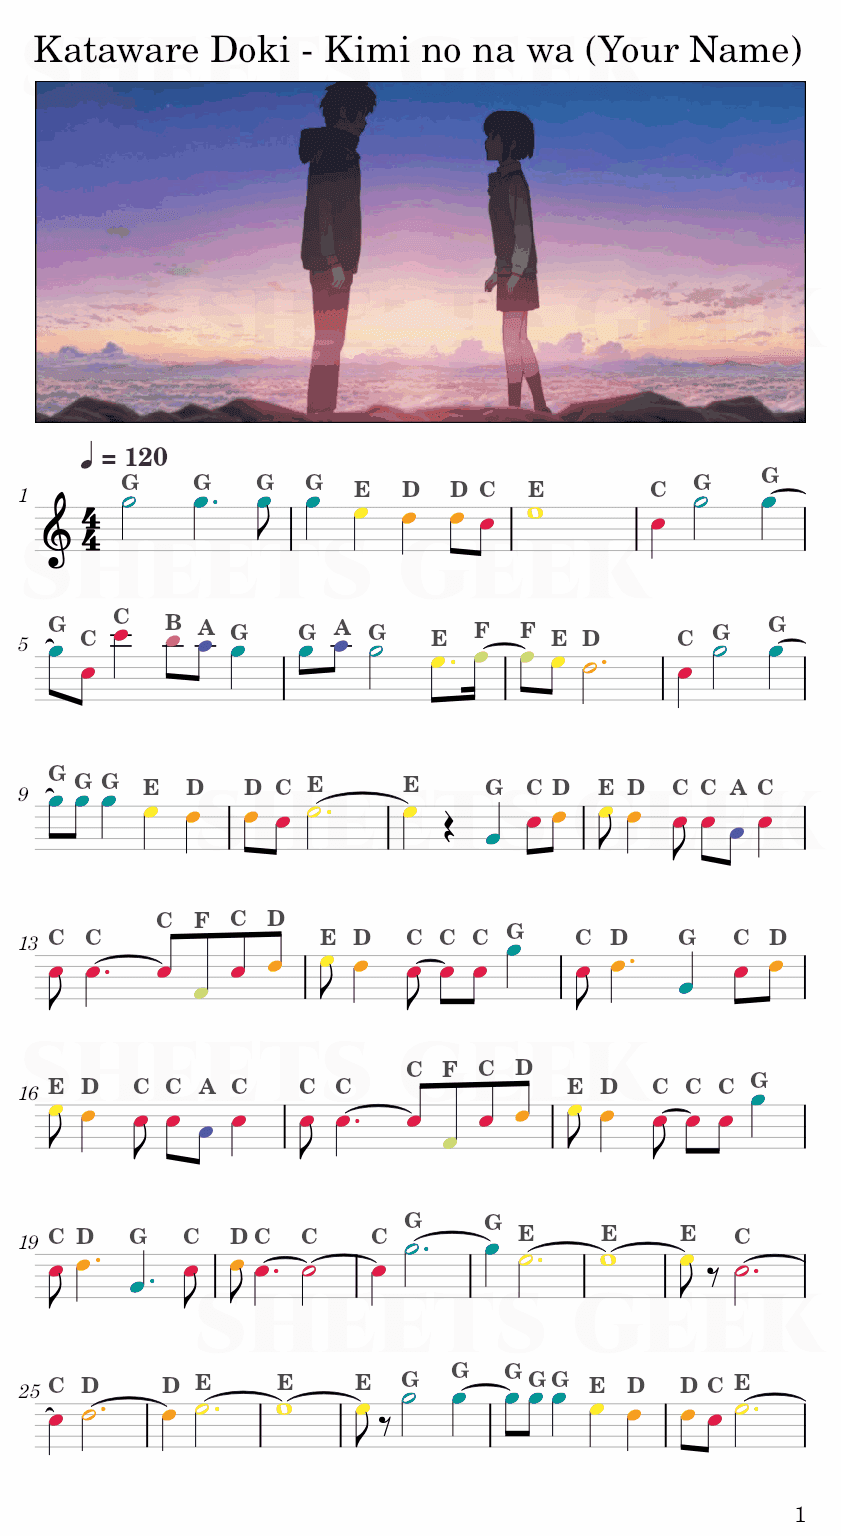 Kataware Doki - Kimi no na wa (Your Name) Easy Sheet Music Free for piano, keyboard, flute, violin, sax, cello page 1